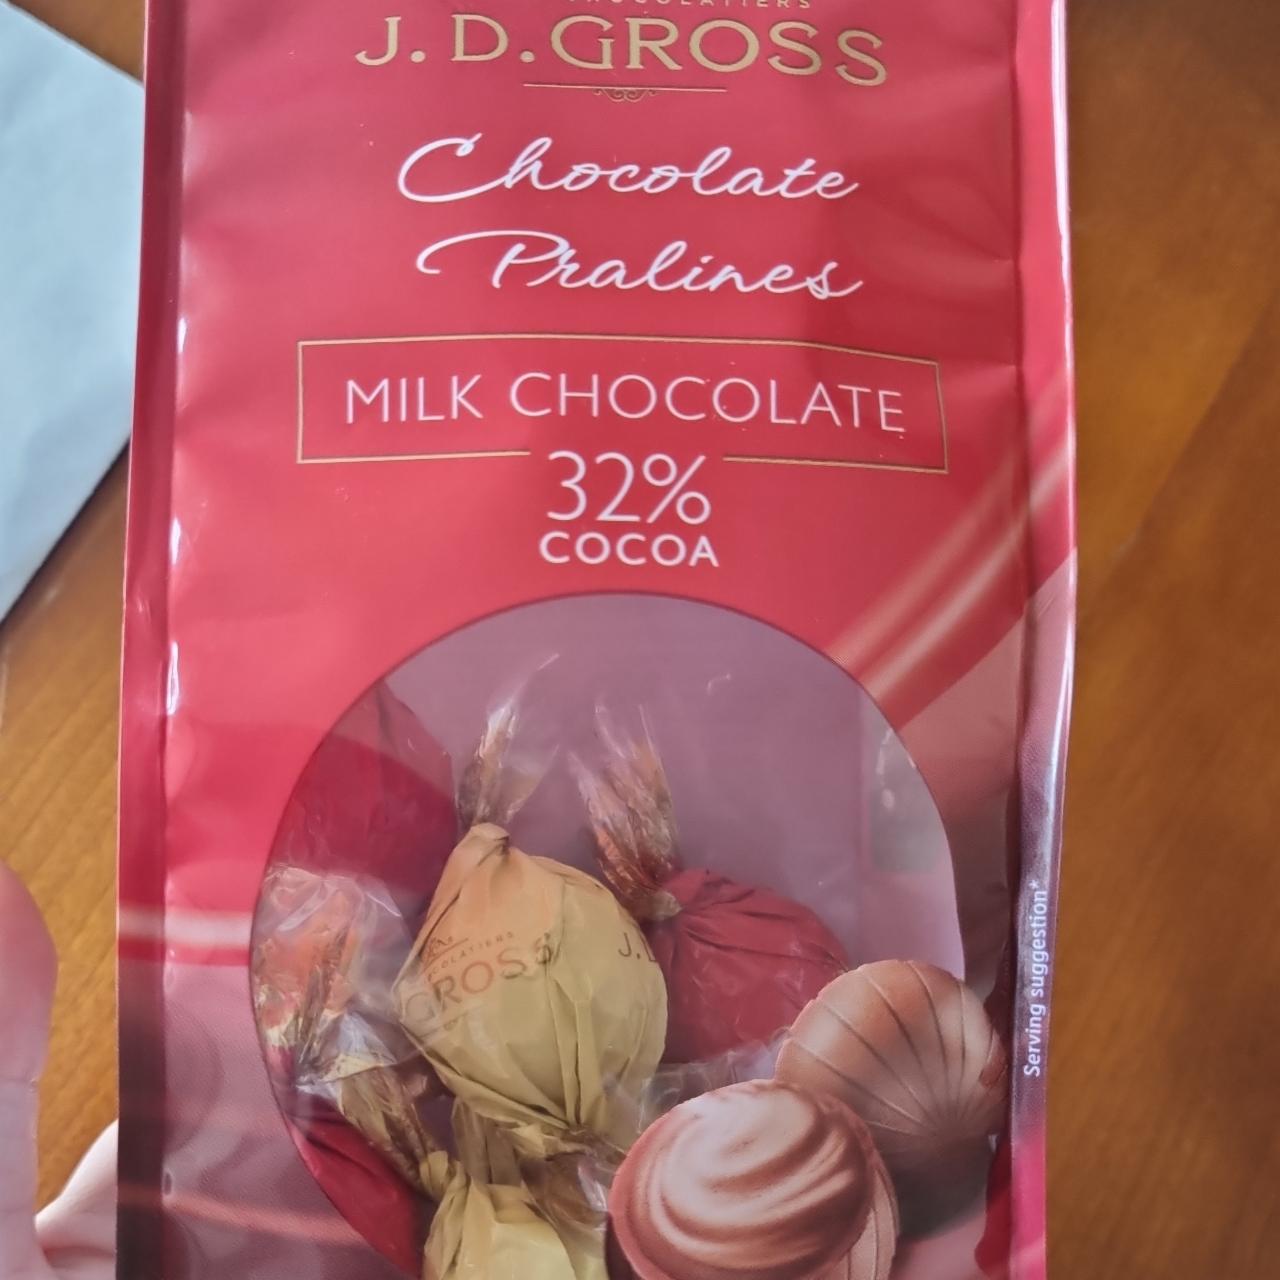 Fotografie - Chocolate pralines milk chocolate 32% cocoa J. D. Gross